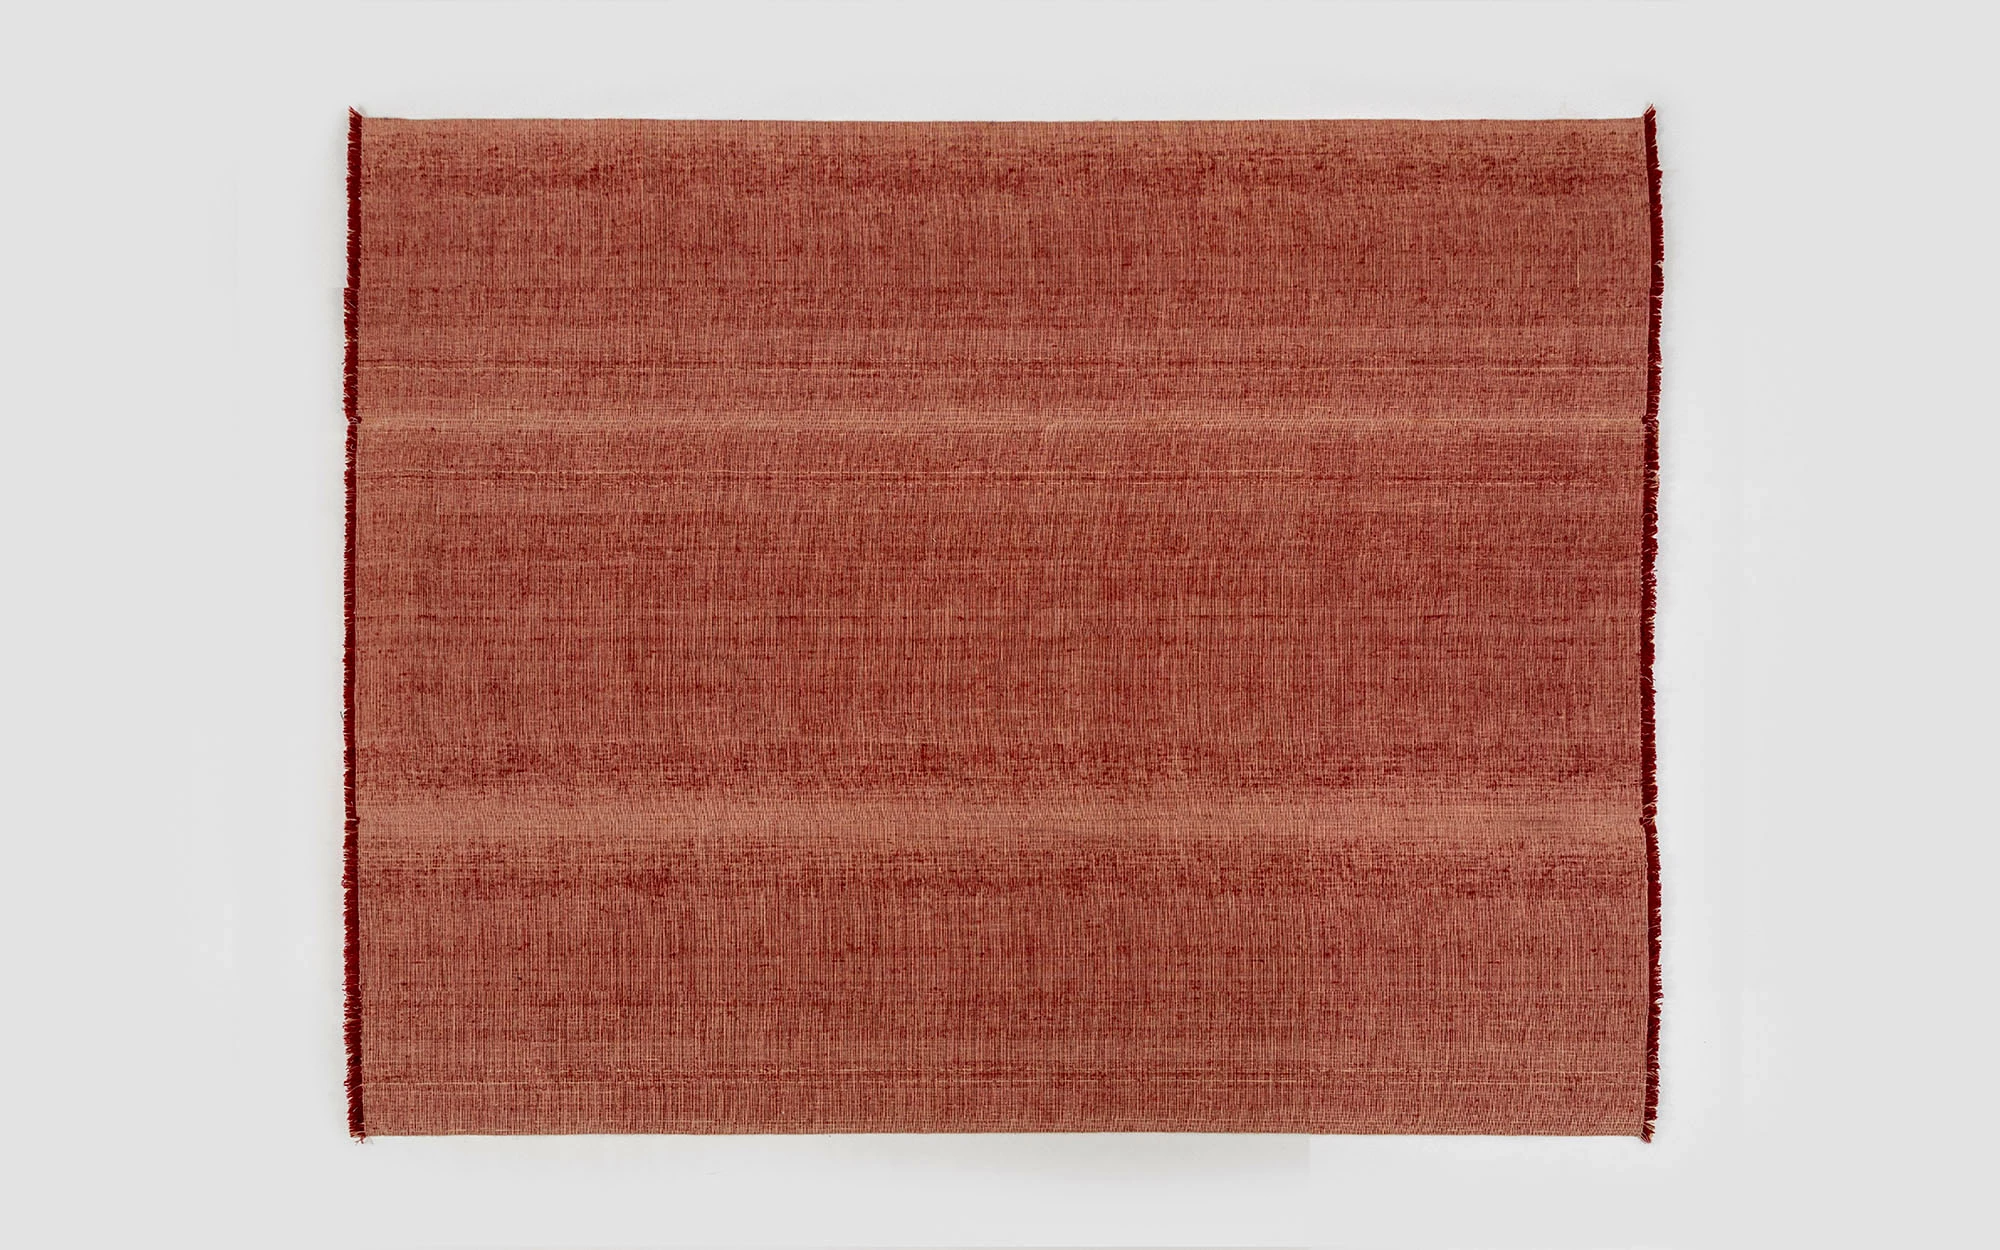 Wilton Carpet S - Ronan & Erwan Bouroullec - Console - Galerie kreo